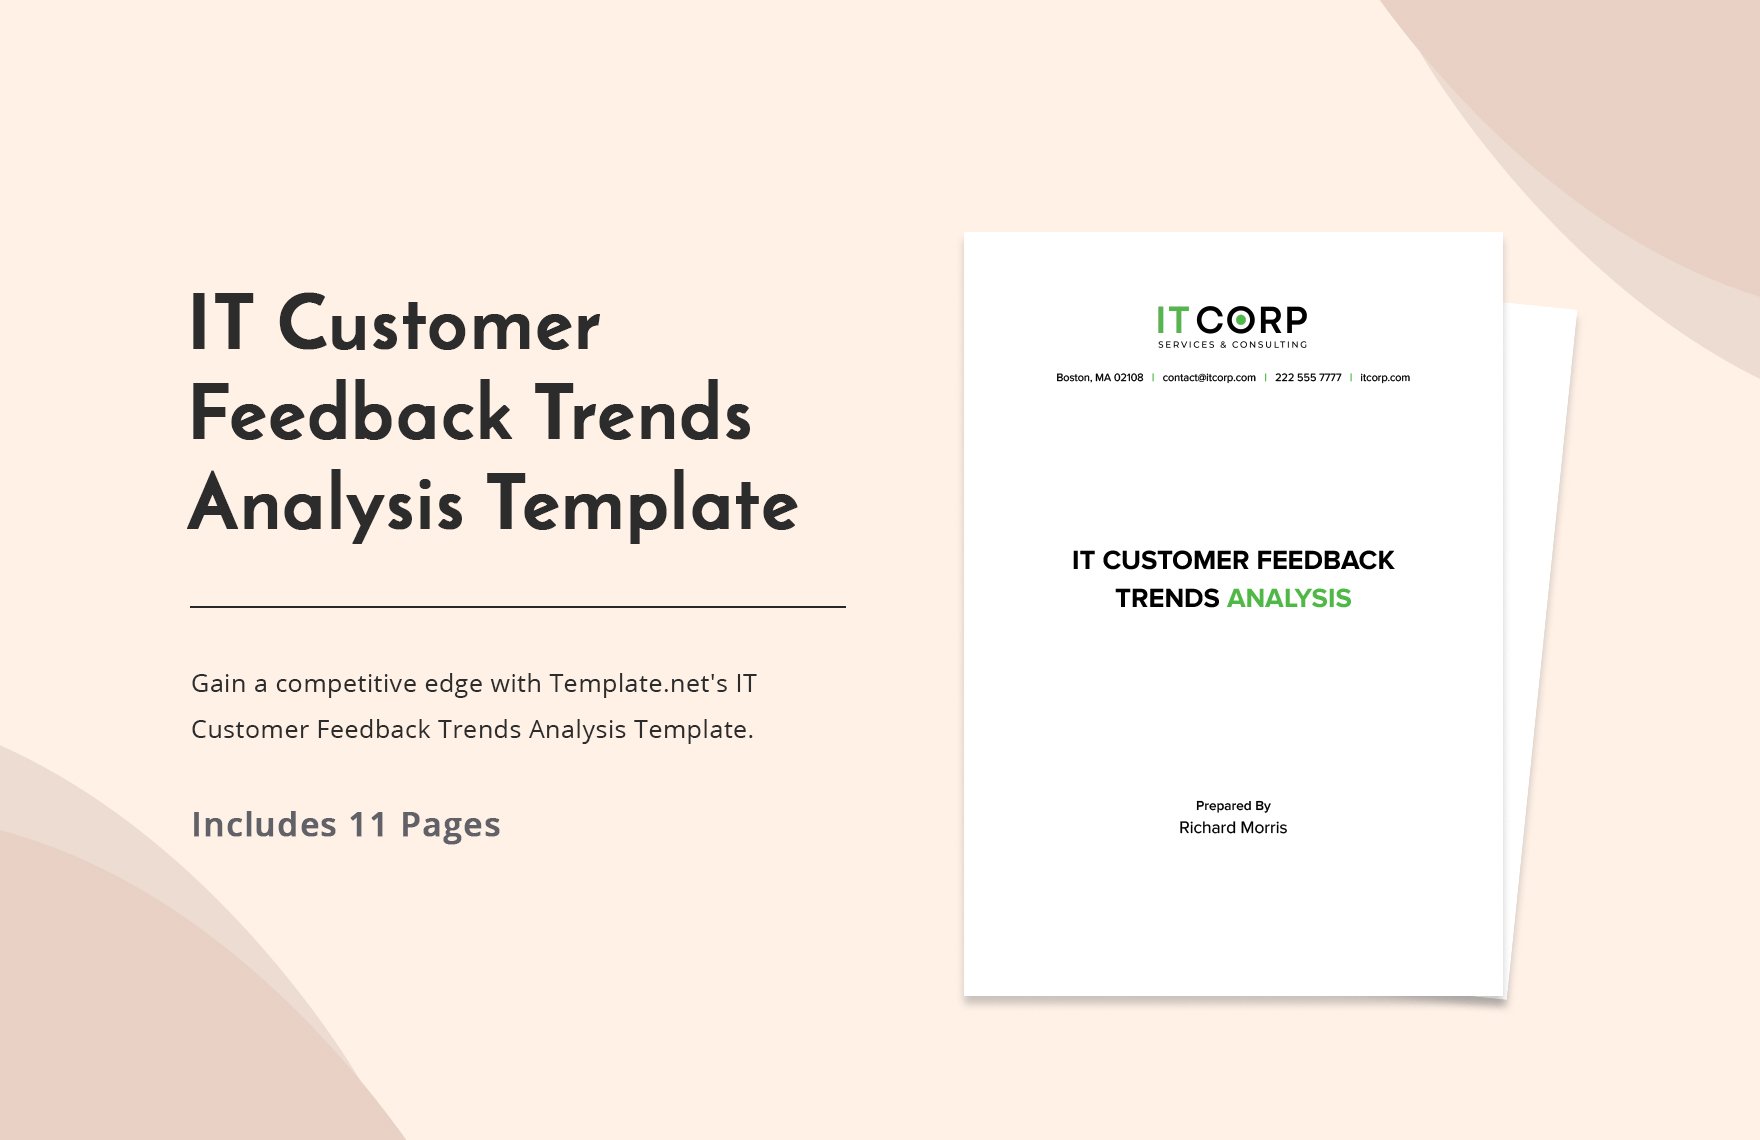 IT Customer Feedback Trends Analysis Template